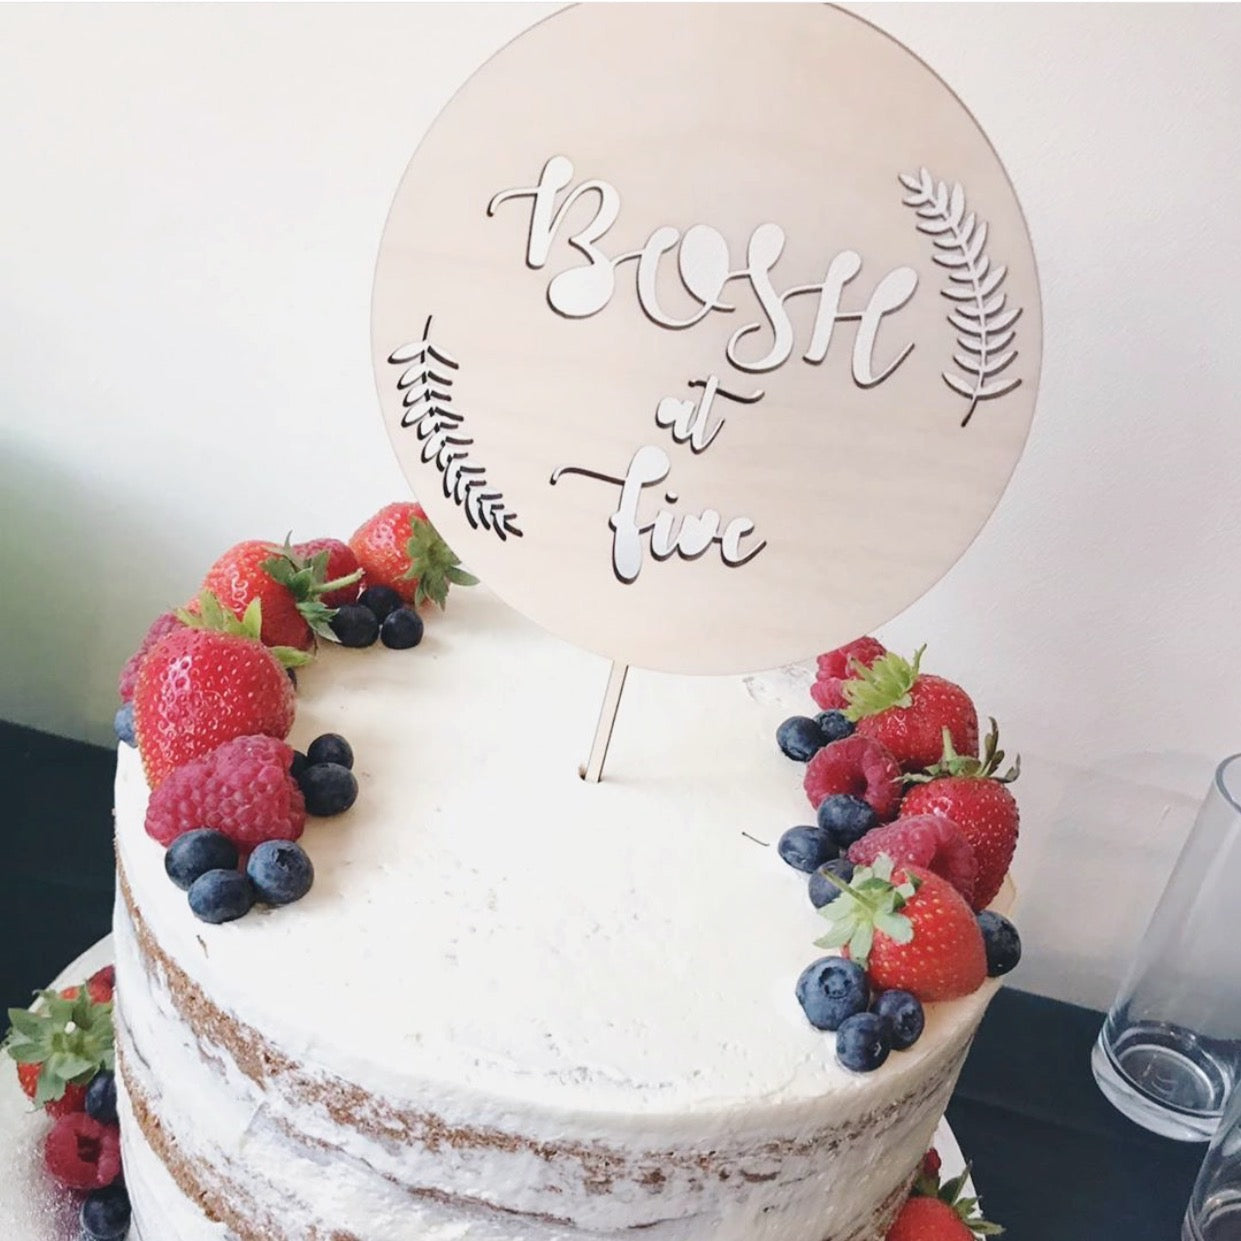 Personalised Cake Topper for Birthdays, Weddings, Hen Do's, Baby Showers